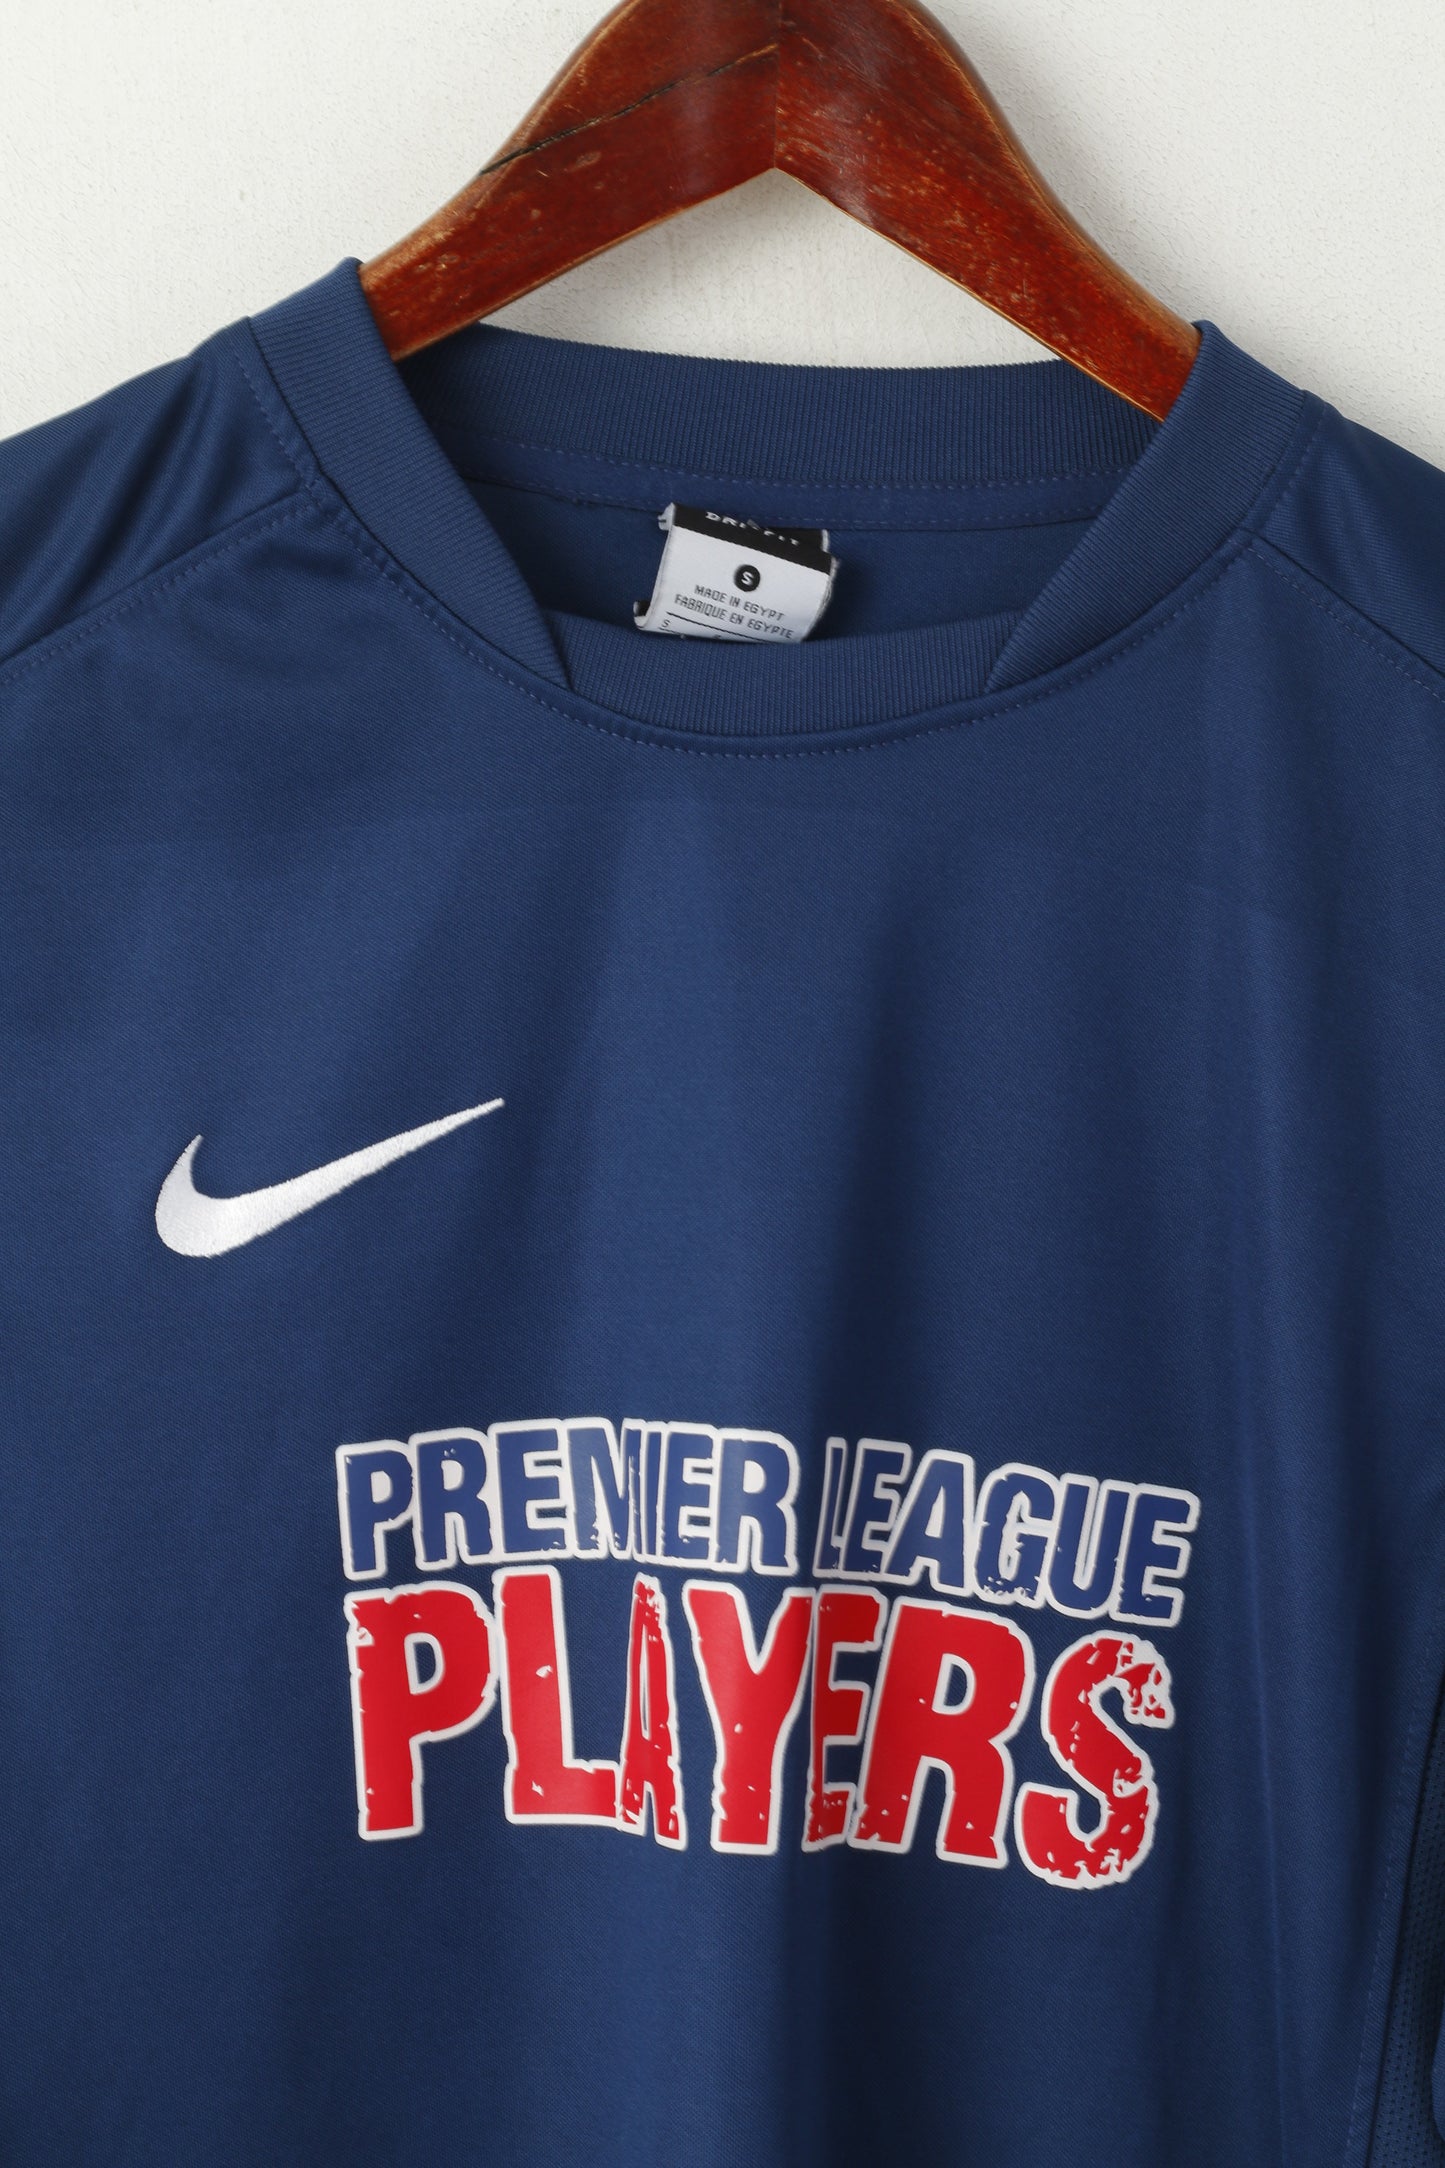 Nike Men S Shirt Navy Premier League Players Long Sleeve Footballers Association Top